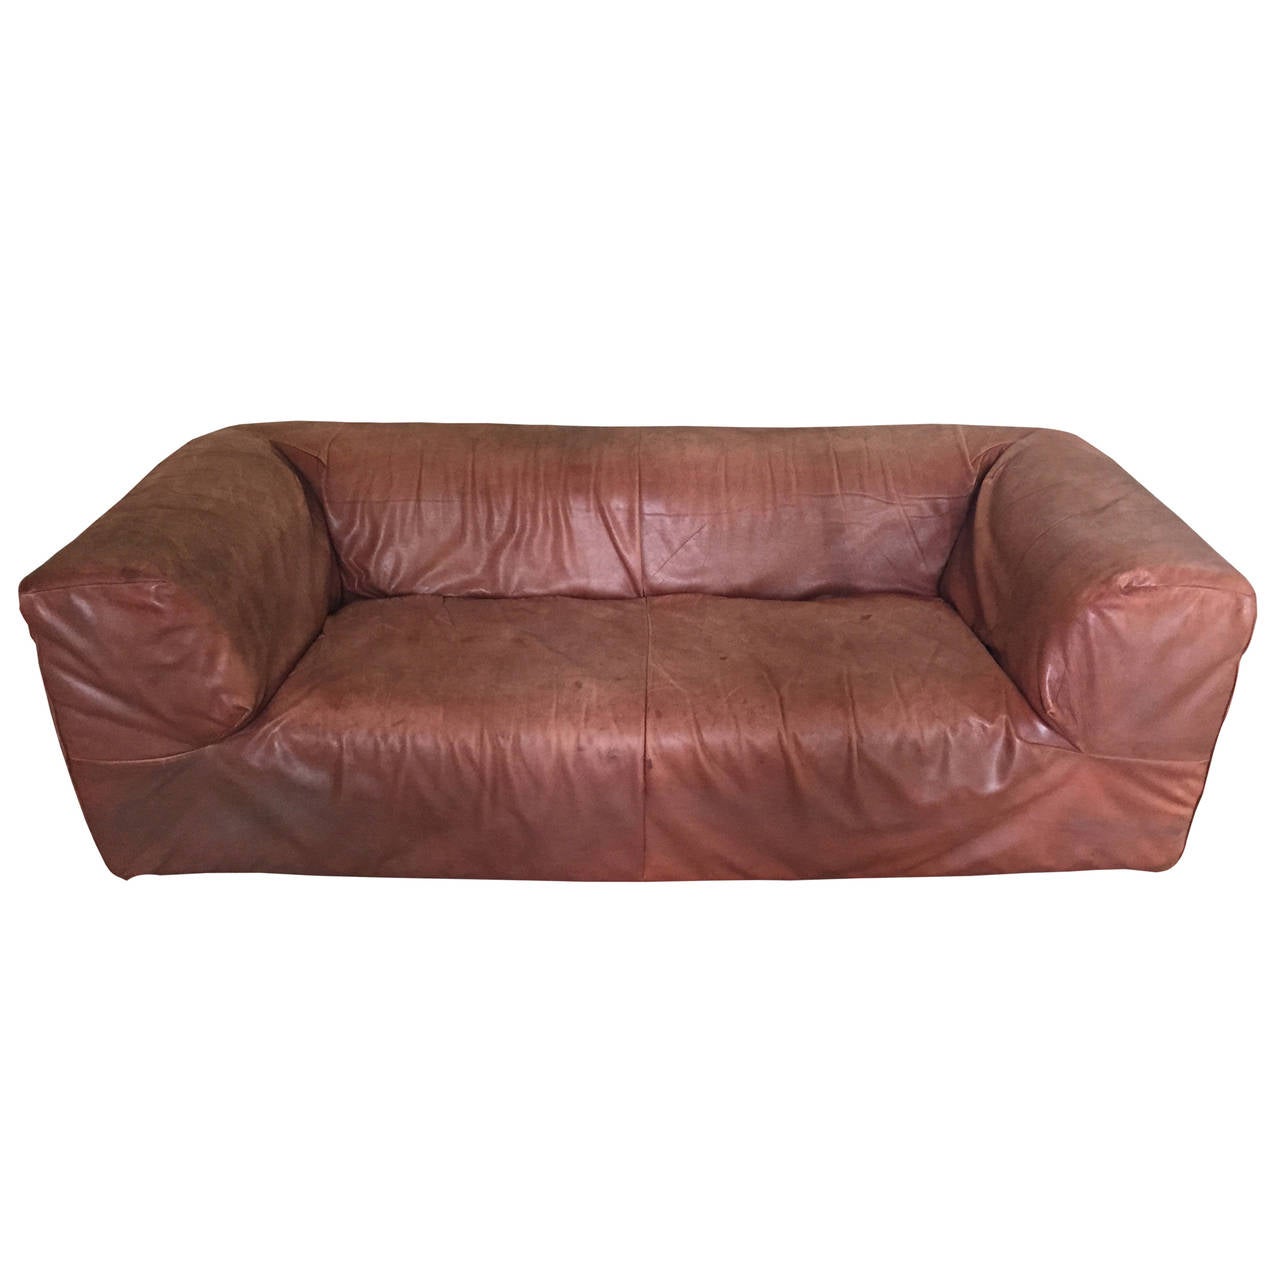 Aztec 1975 leather sofa by Gerard Van Den Berg For Sale